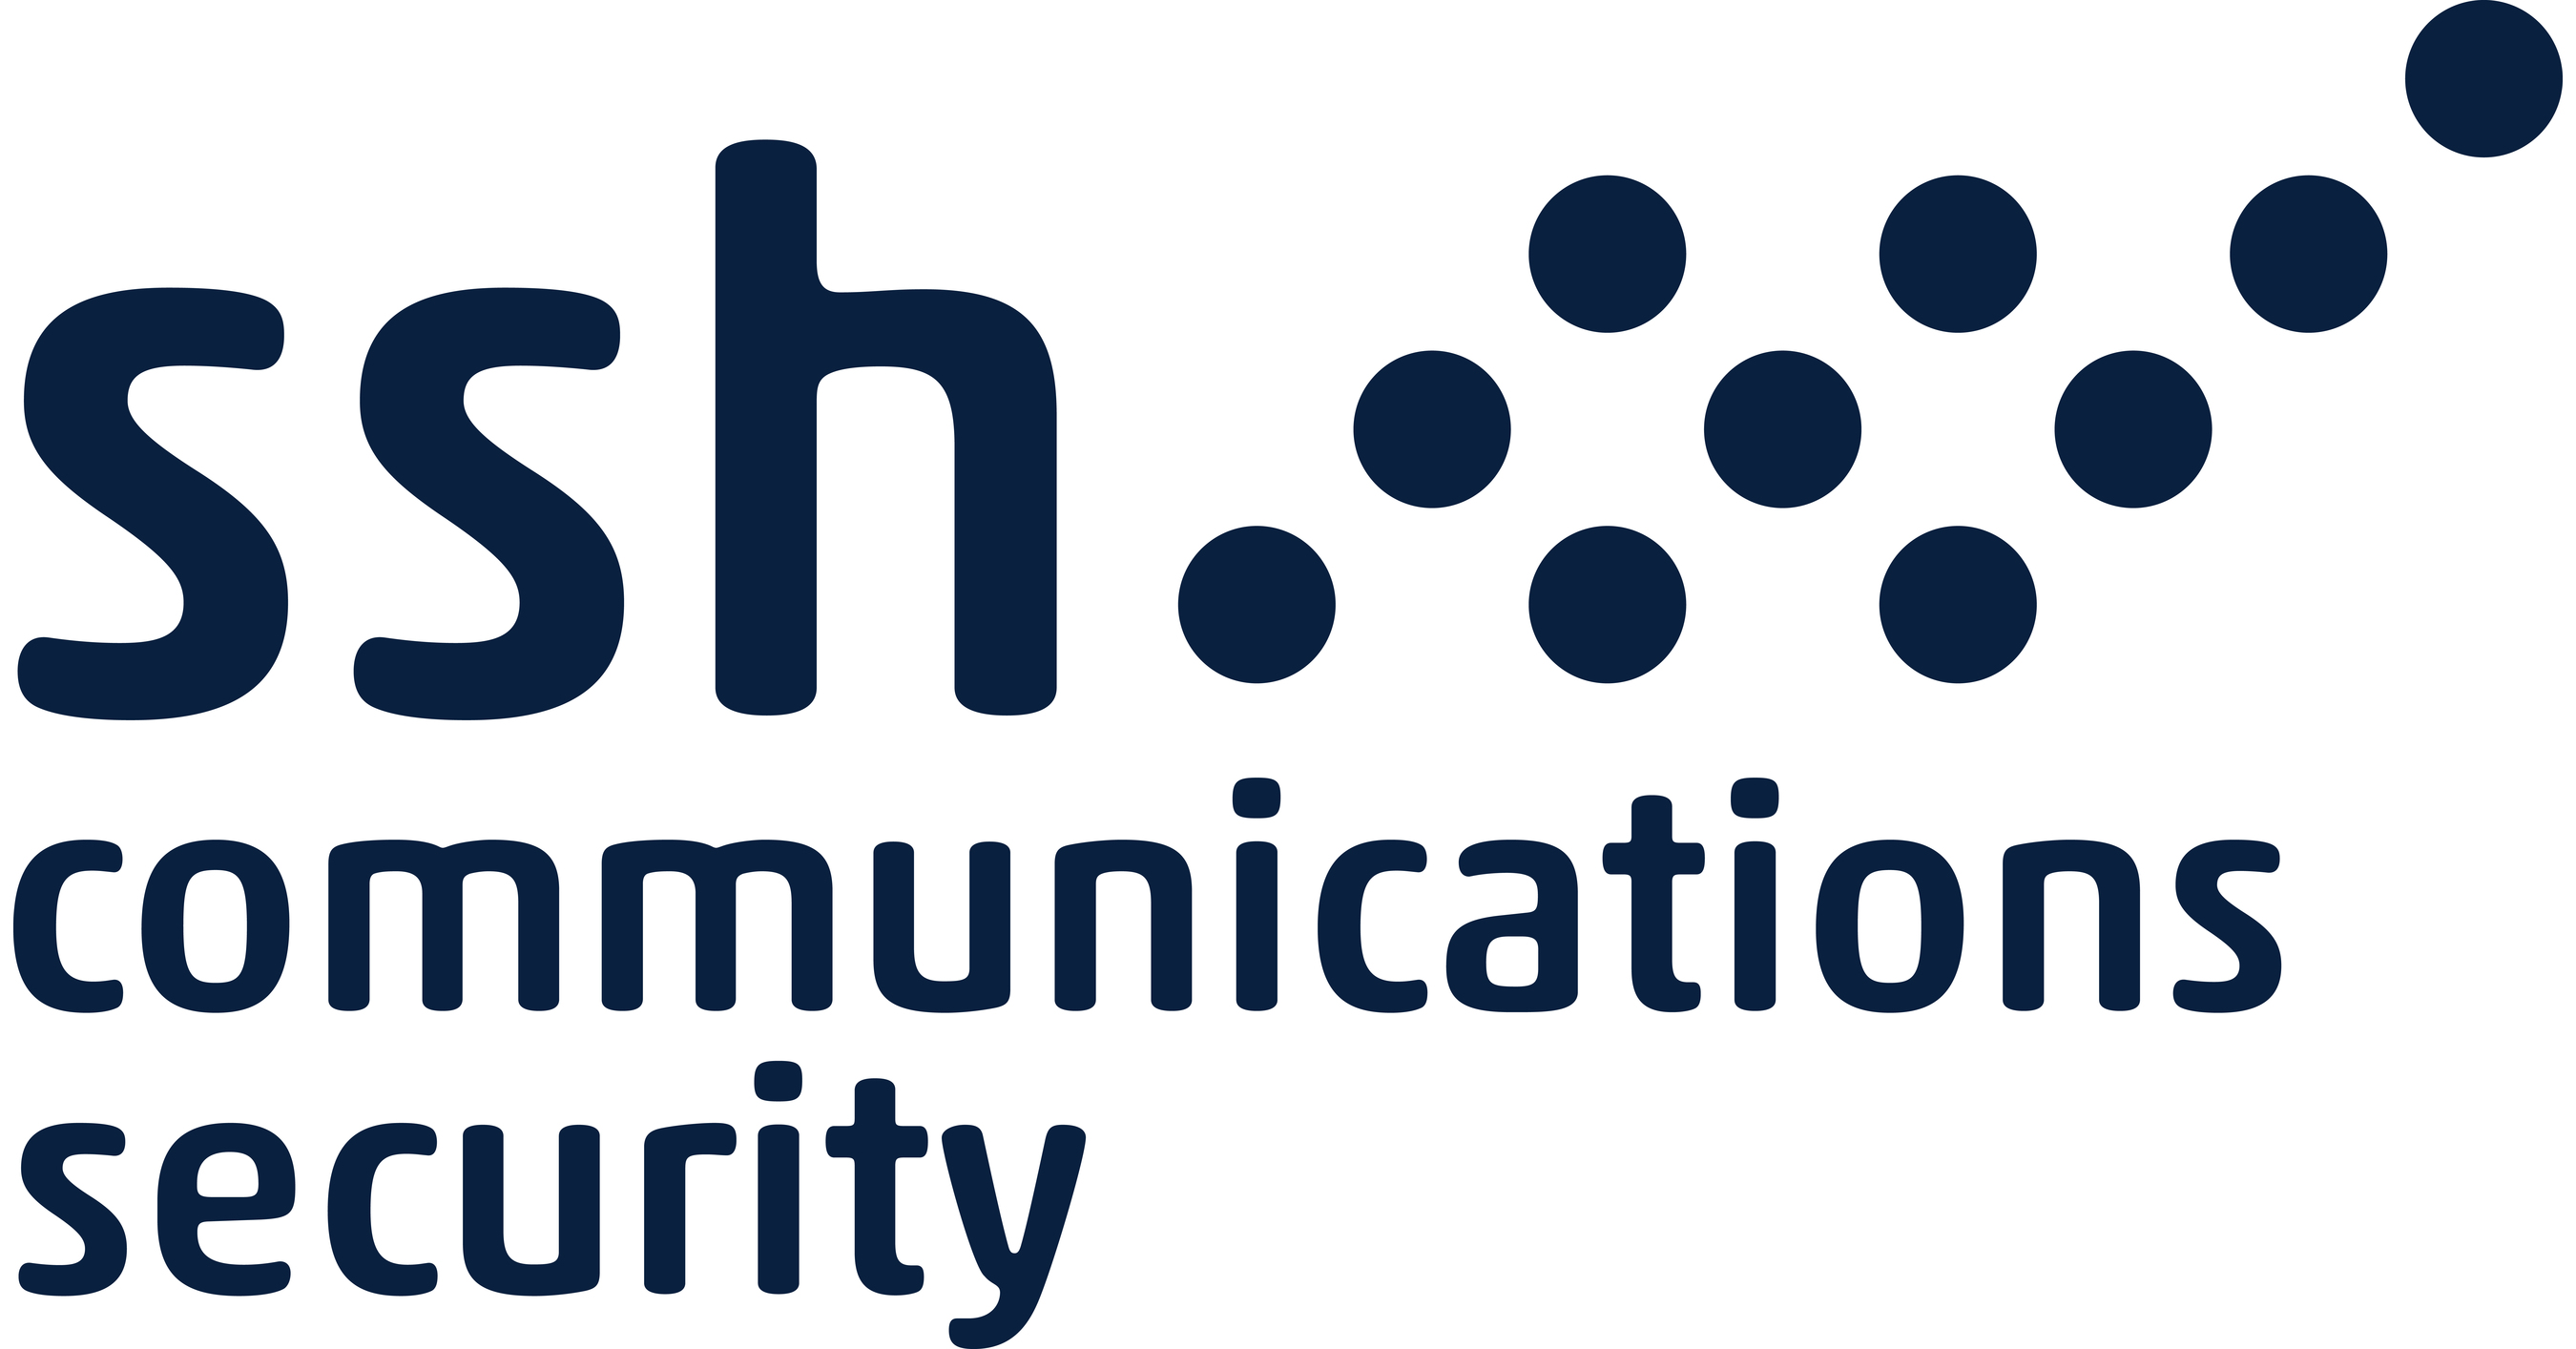 Open Communication Security Logo photo - 1